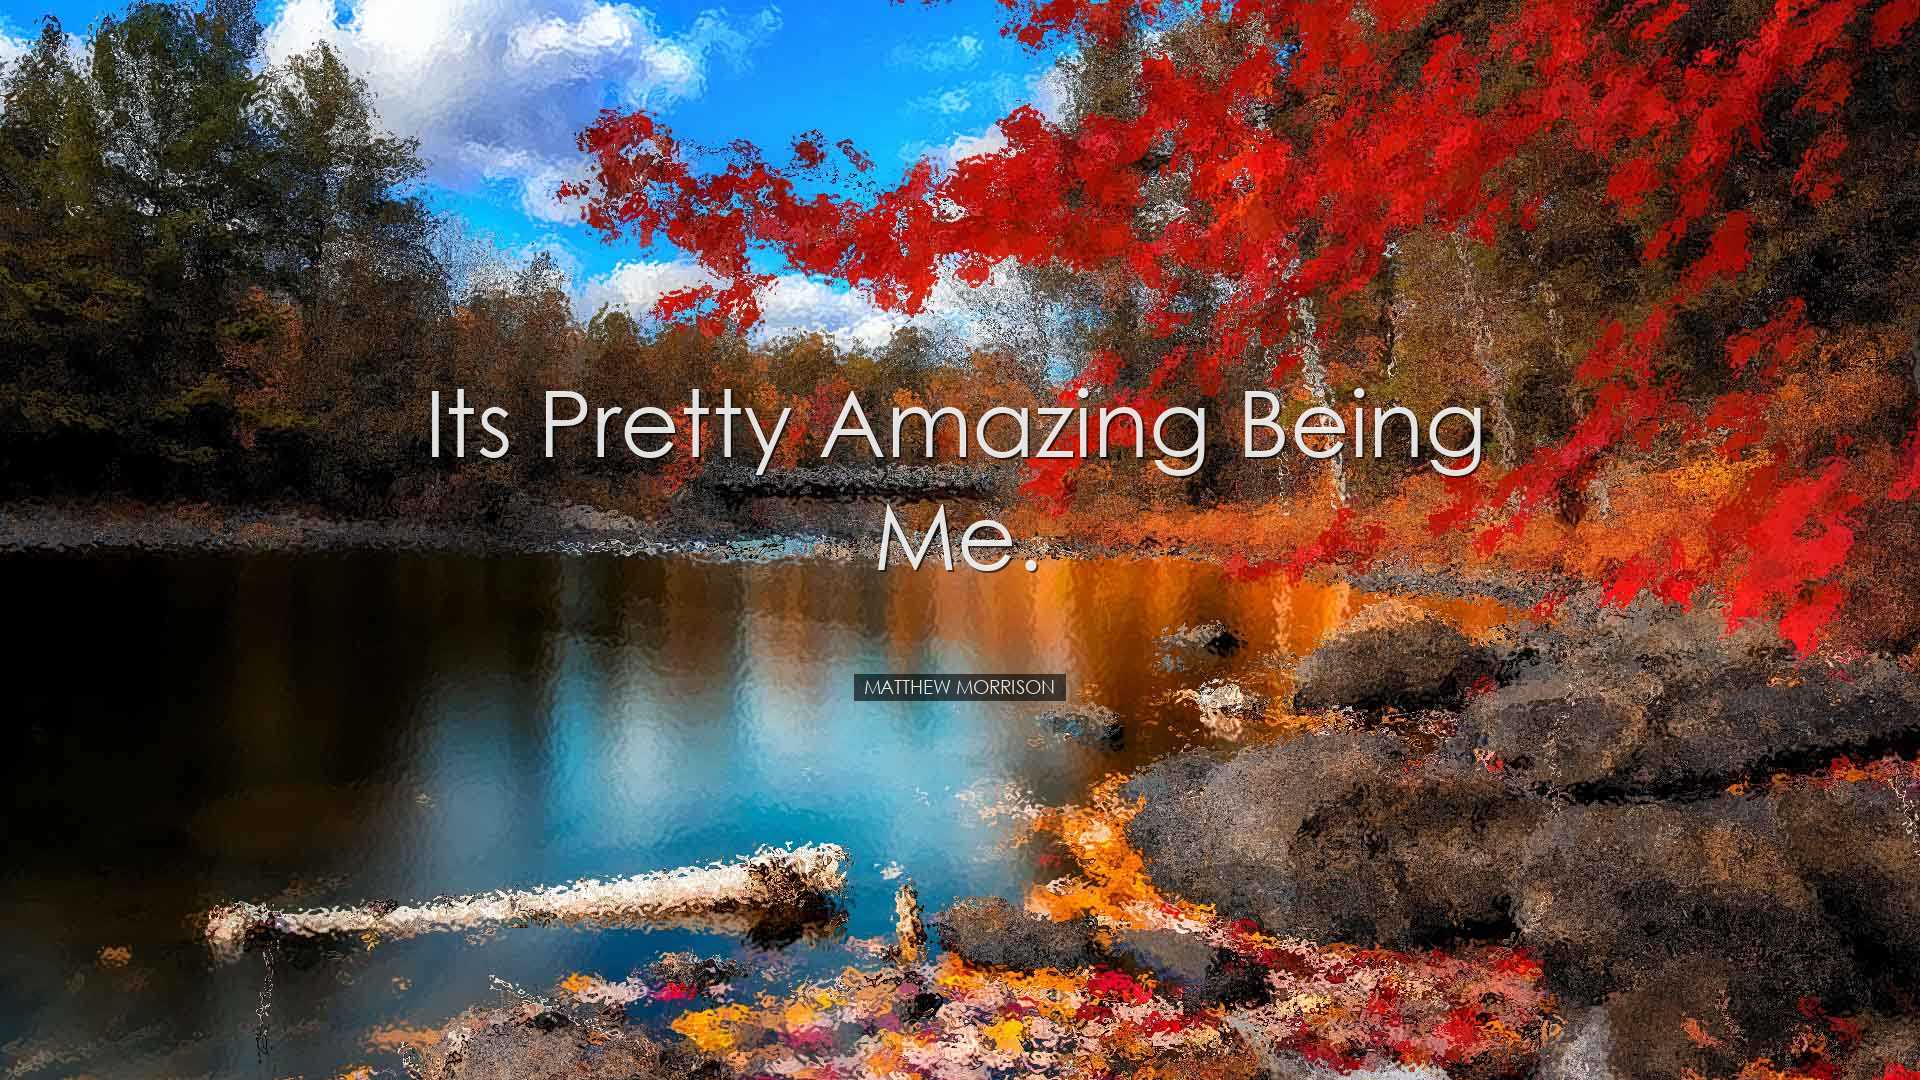 Its pretty amazing being me. - Matthew Morrison